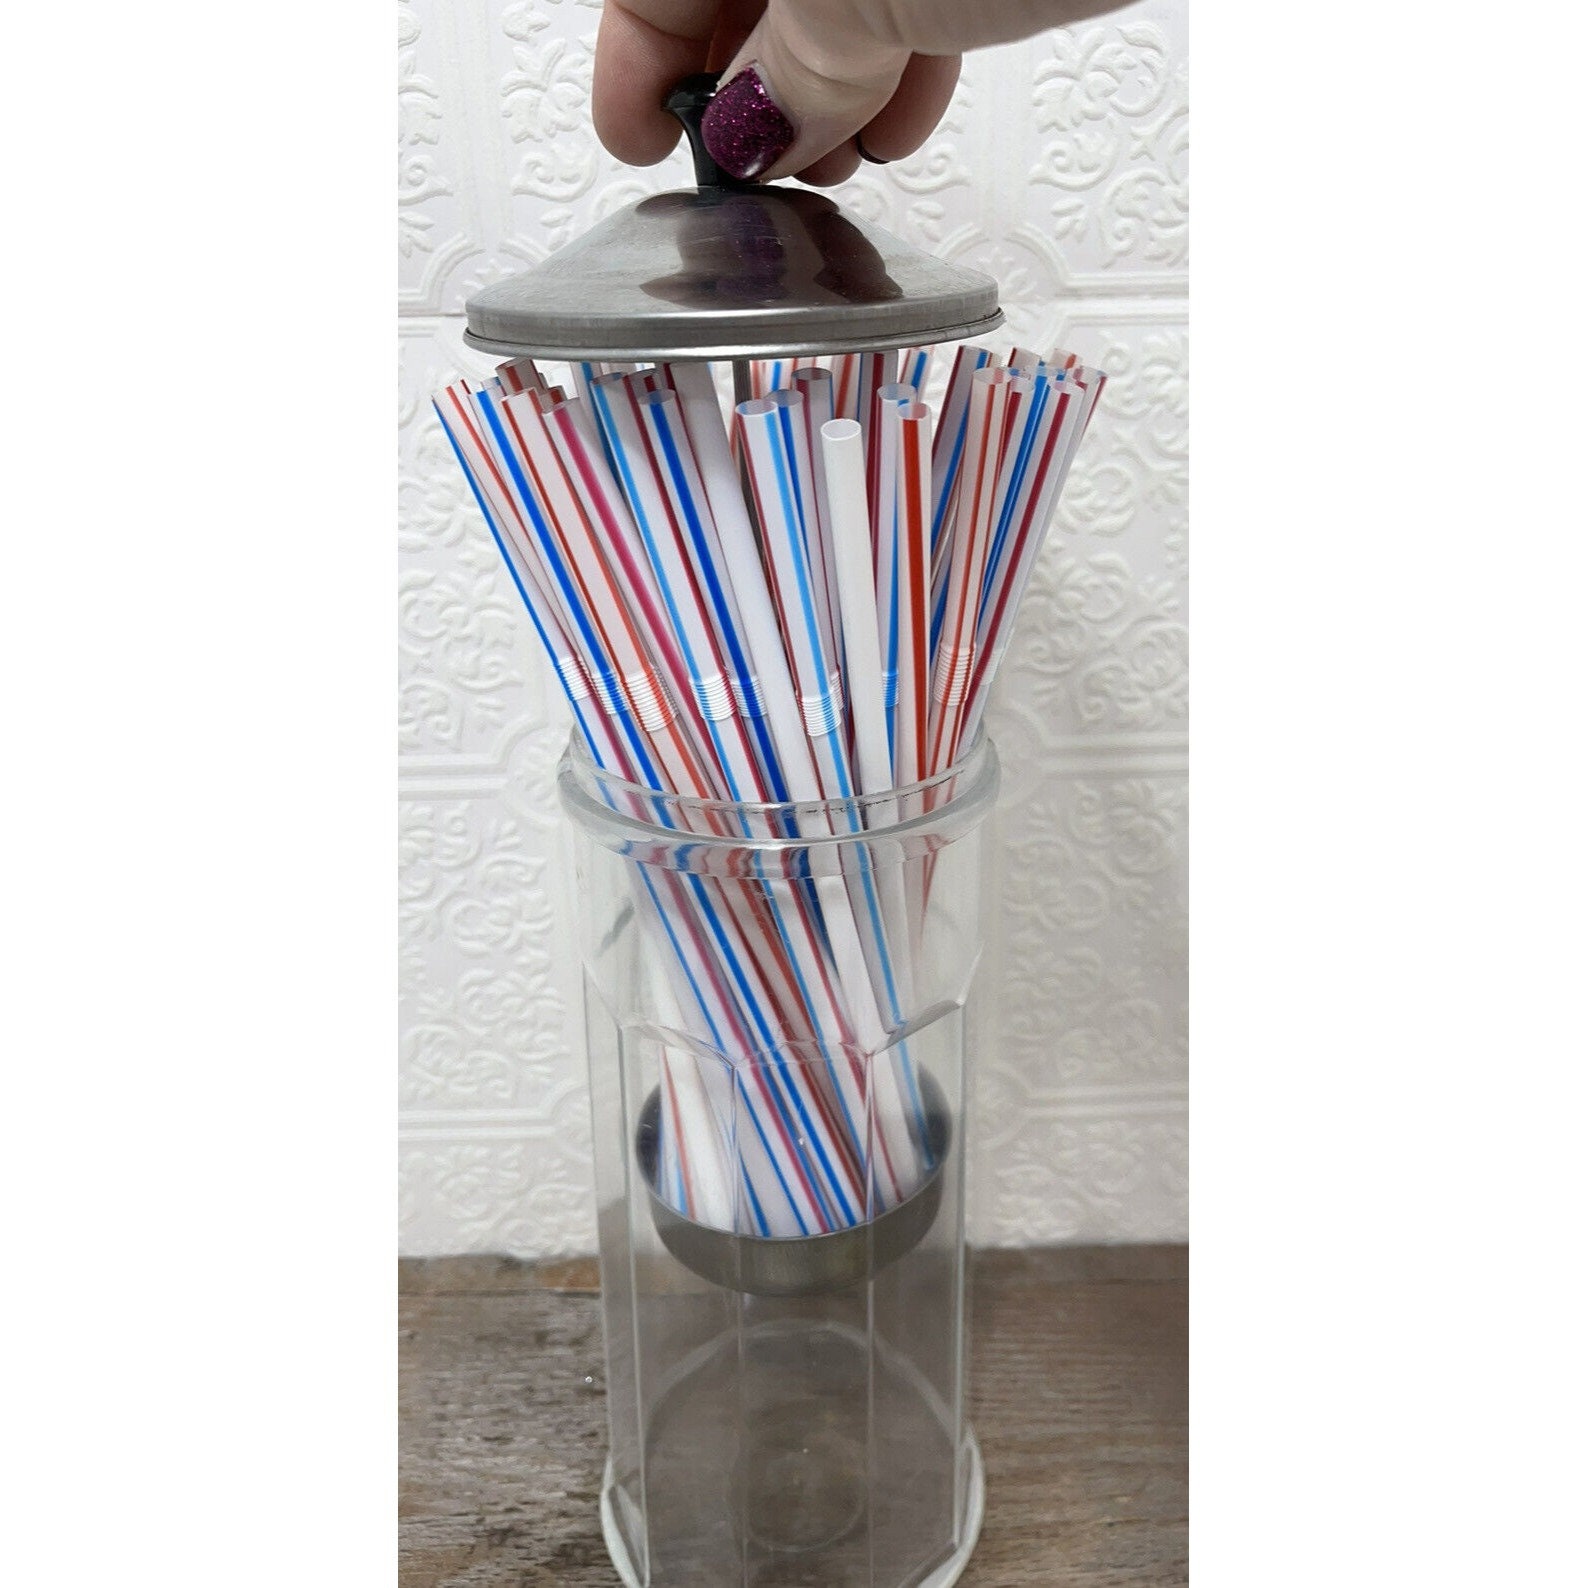 Acrylic Straw Dispenser 10 Bar Pub Accessories Straw Holder Container